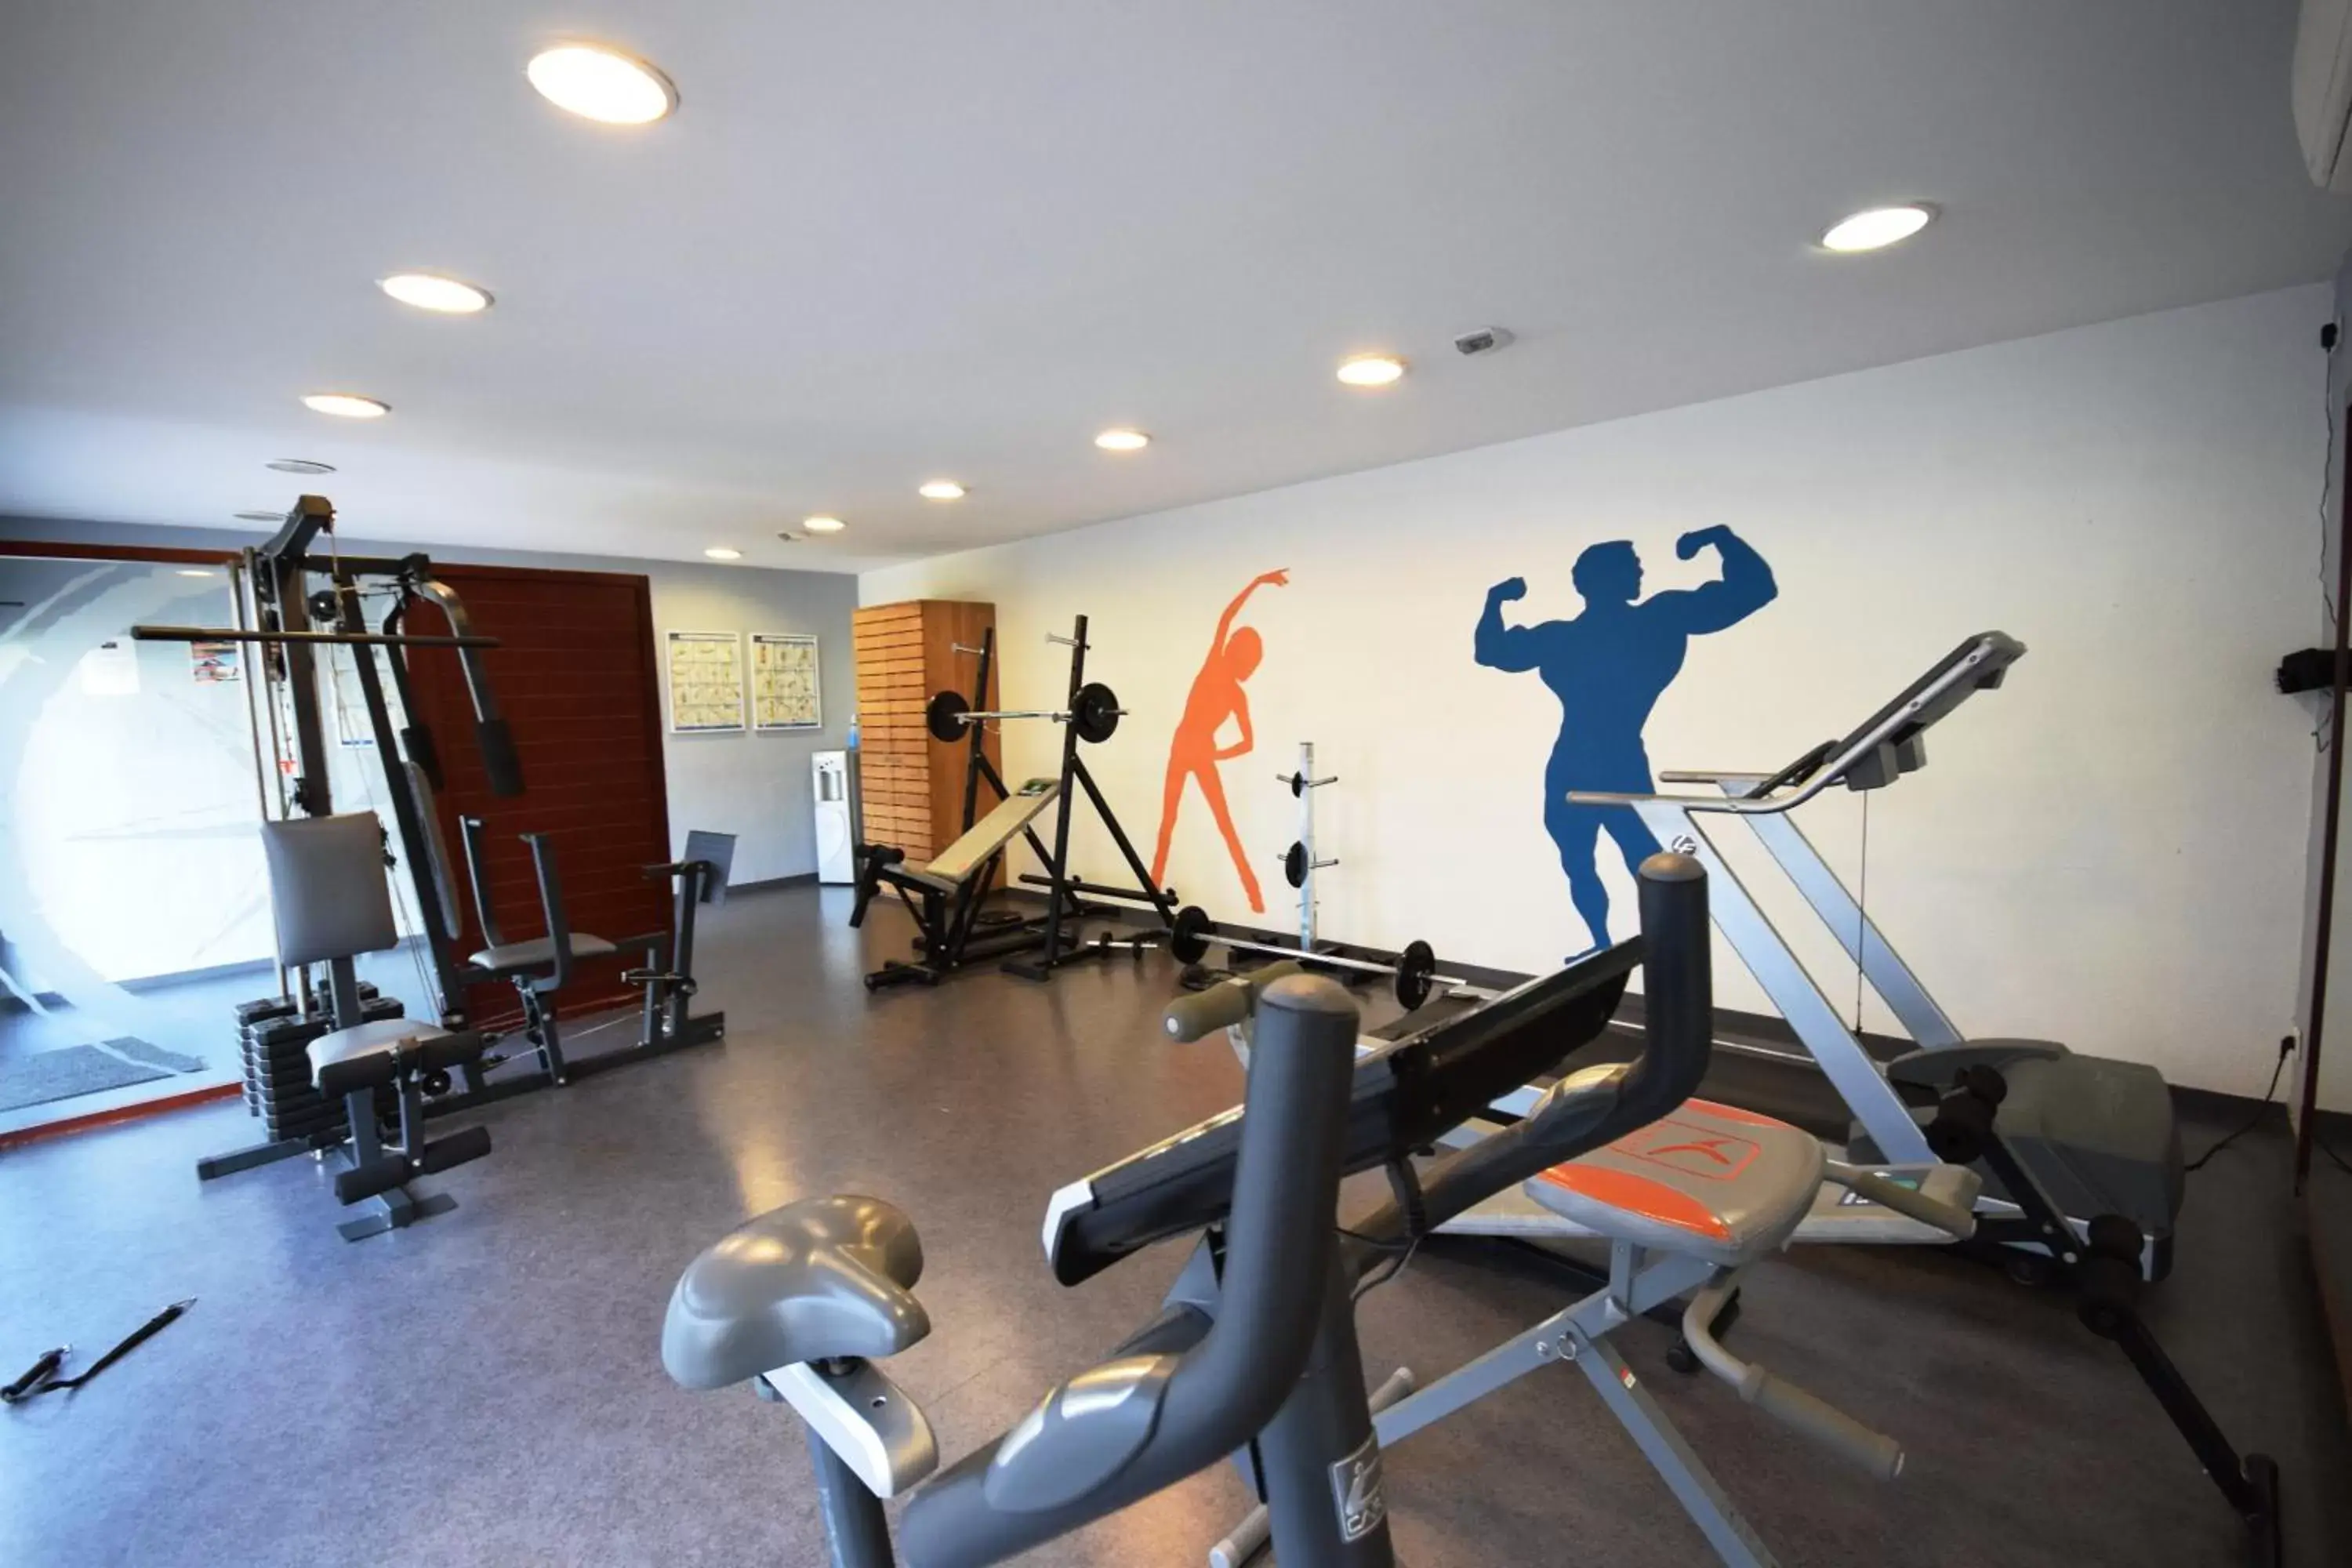 Fitness centre/facilities, Fitness Center/Facilities in Kyriad Prestige Bordeaux Aeroport